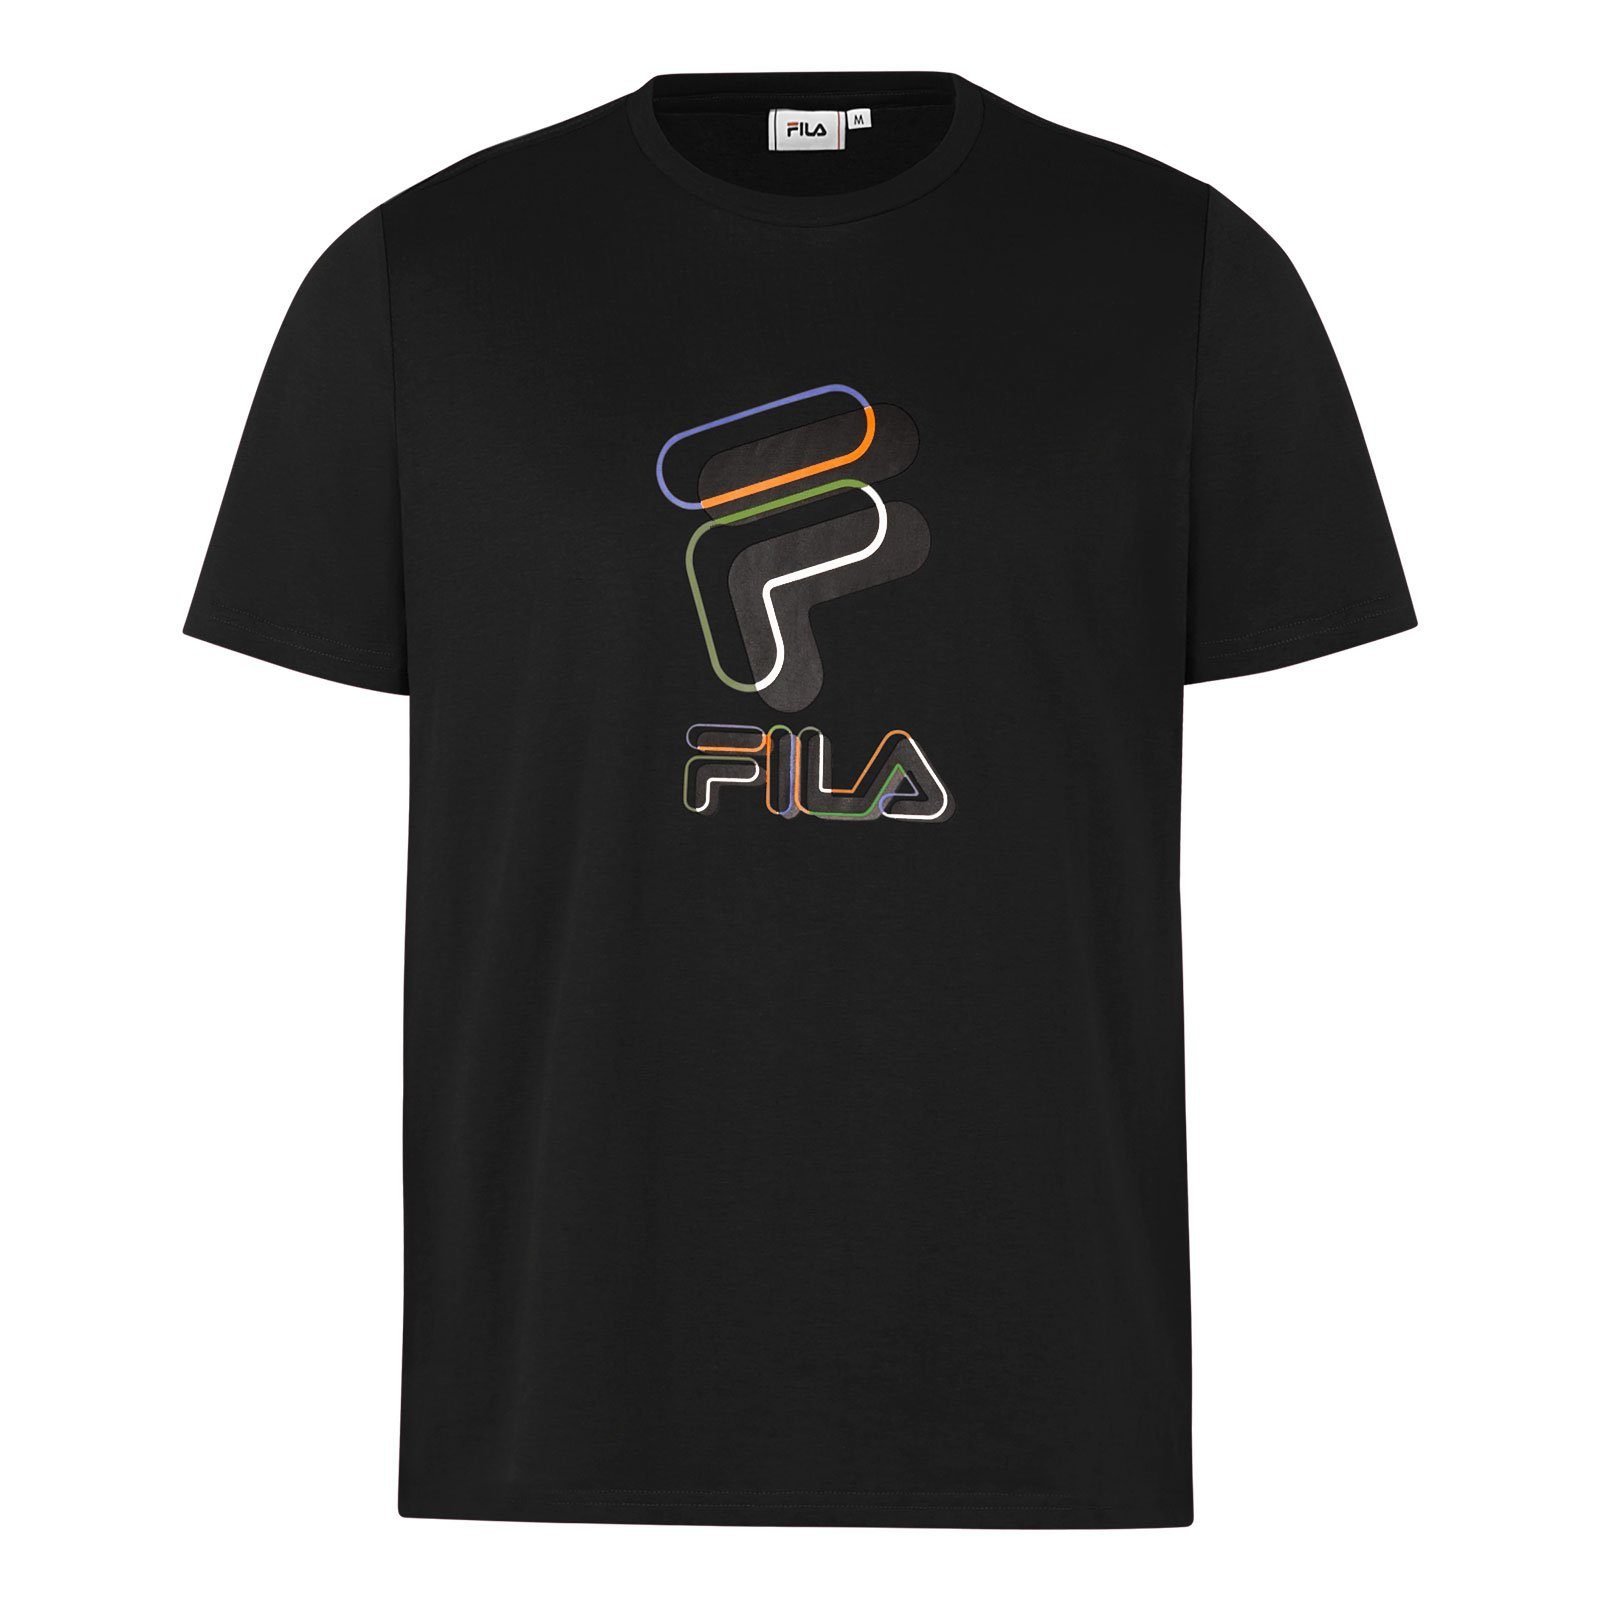 Outline-FILA-Logo 80001 Bibbiena Fila T-Shirt moonless stylischem night Tee mit